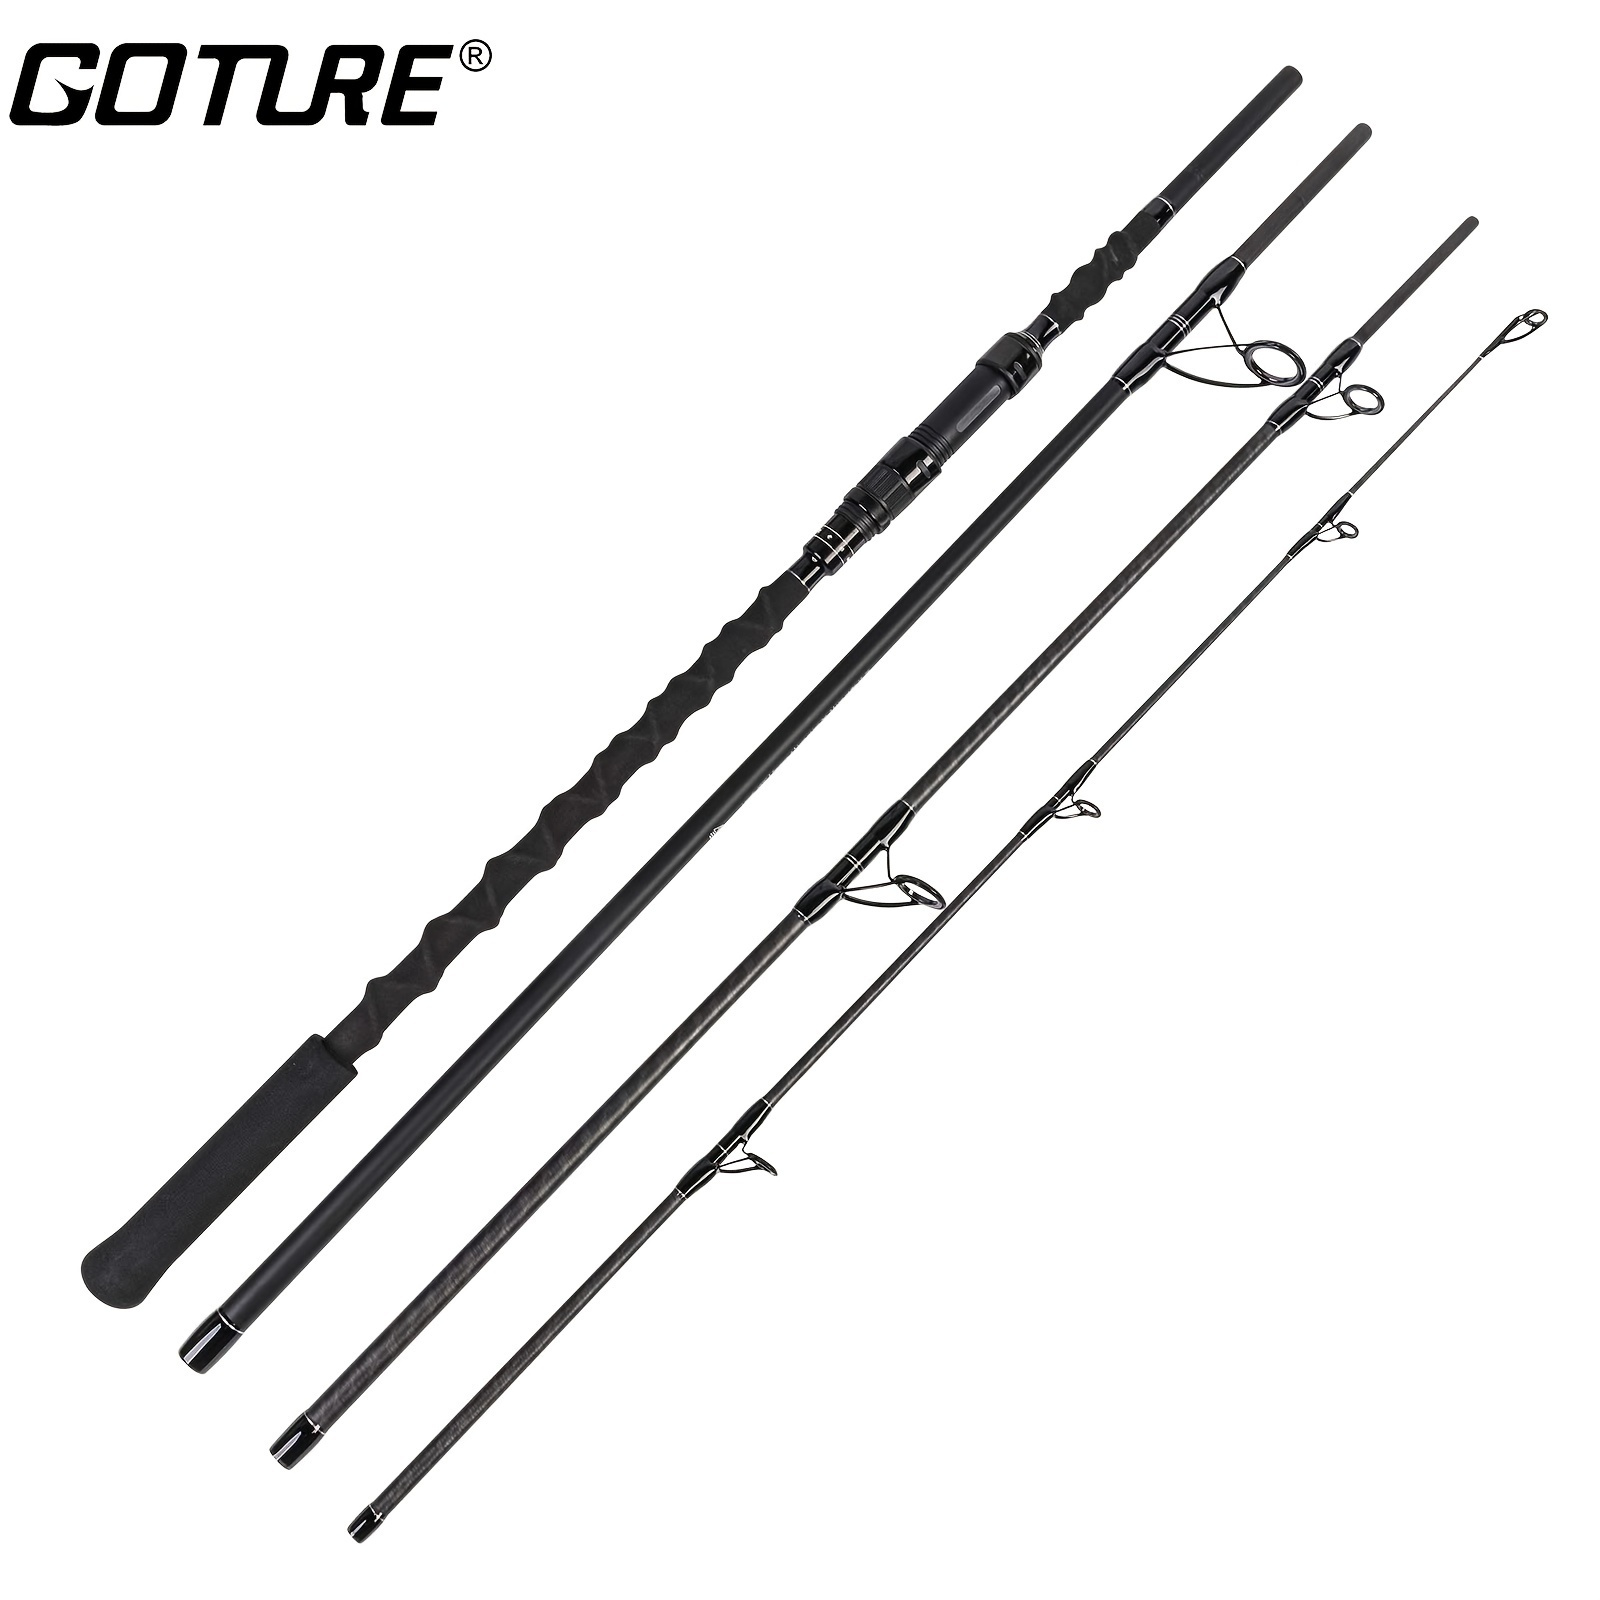 Goture Capella Tenkara Rod Kit 12FT/3.6M Fishing Rod, 30T Carbon